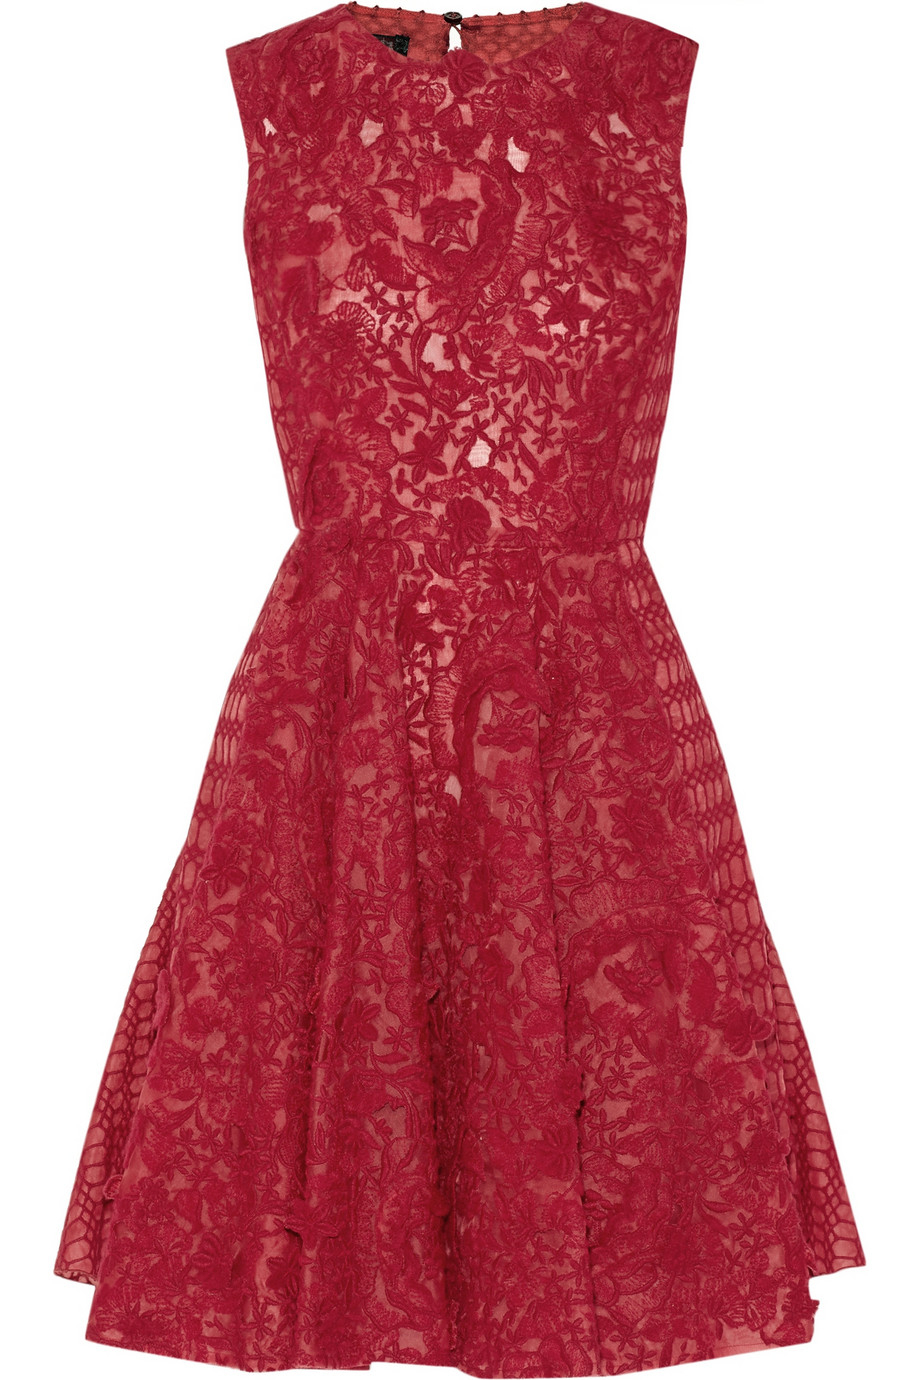 Lyst - Giambattista valli Pleated Macramé Lace Dress in Red